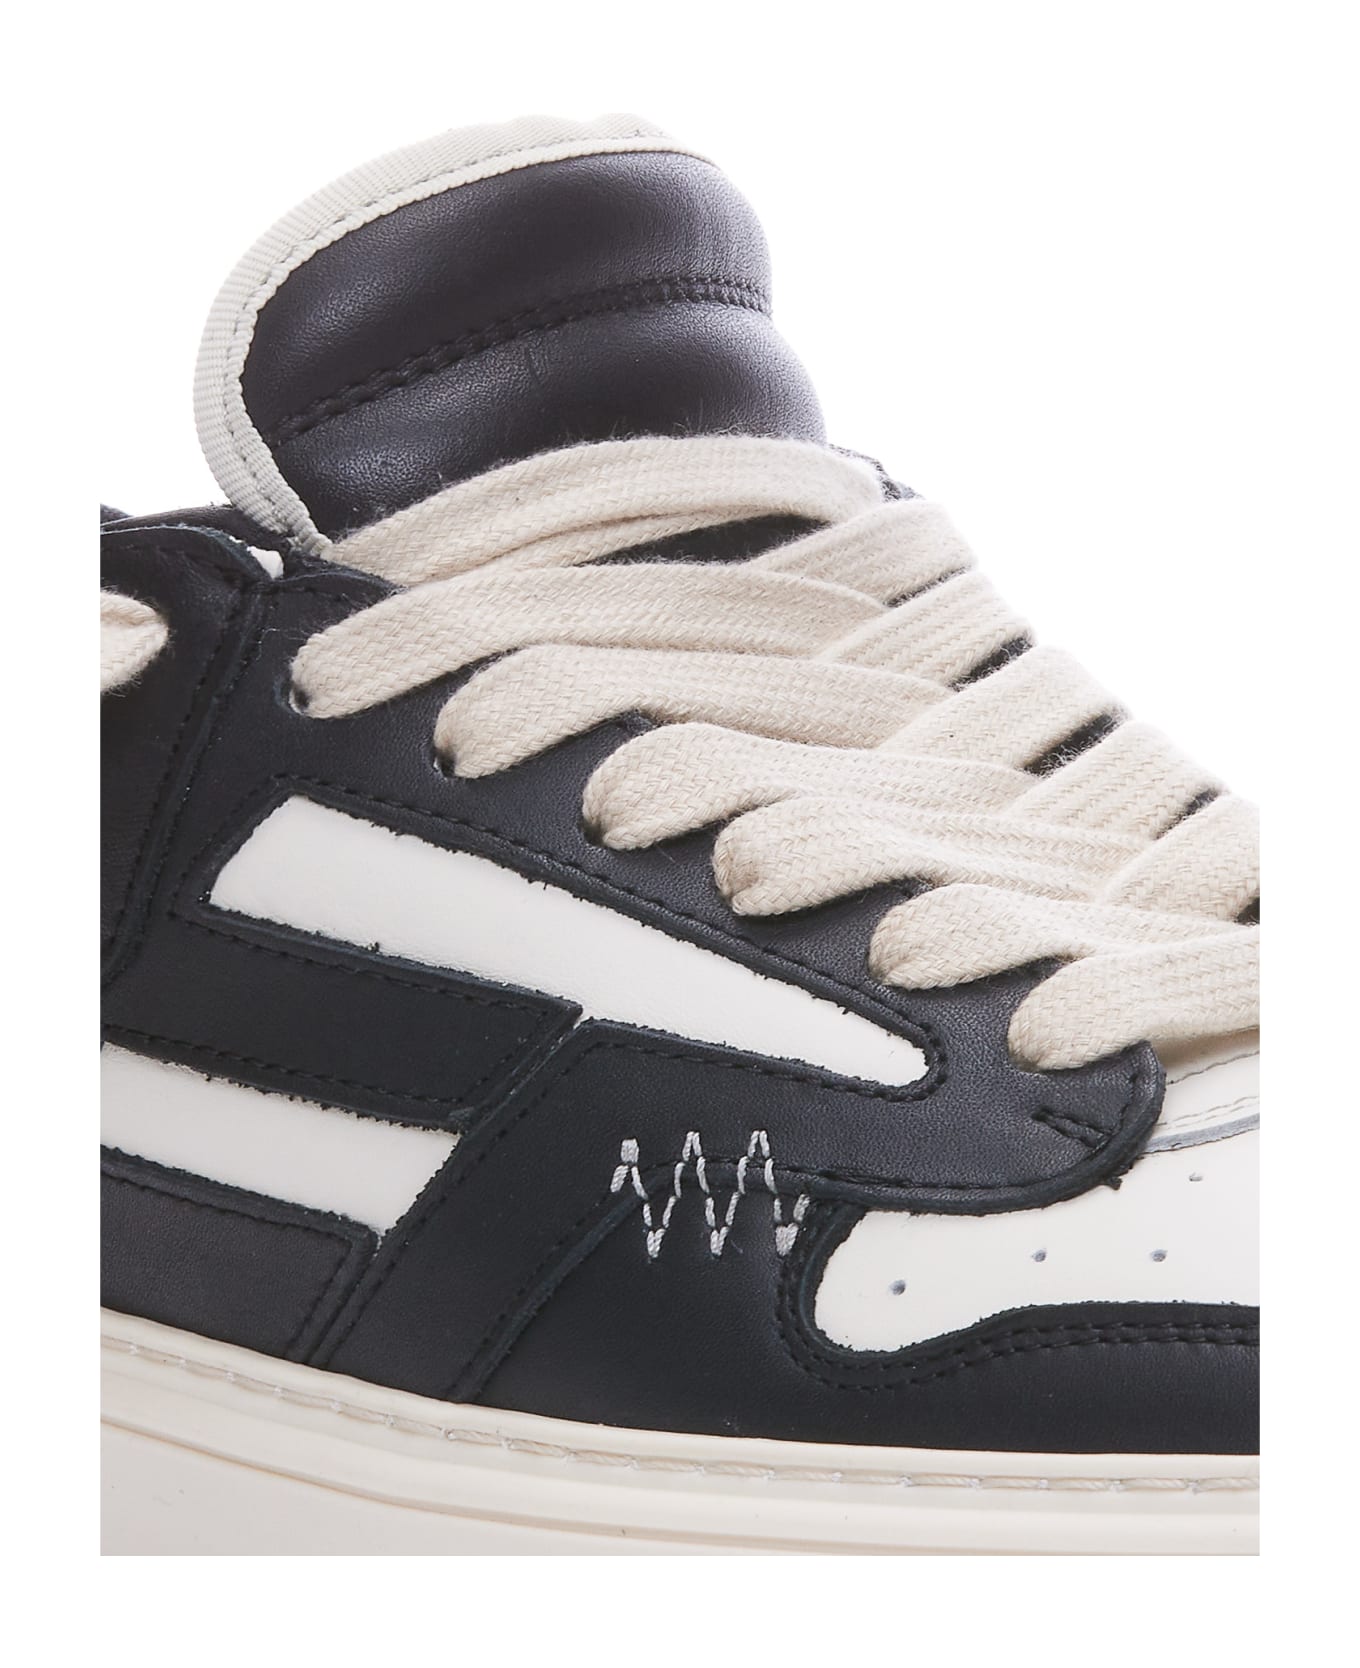 REPRESENT Reptor Low Sneakers - Black/vintage white